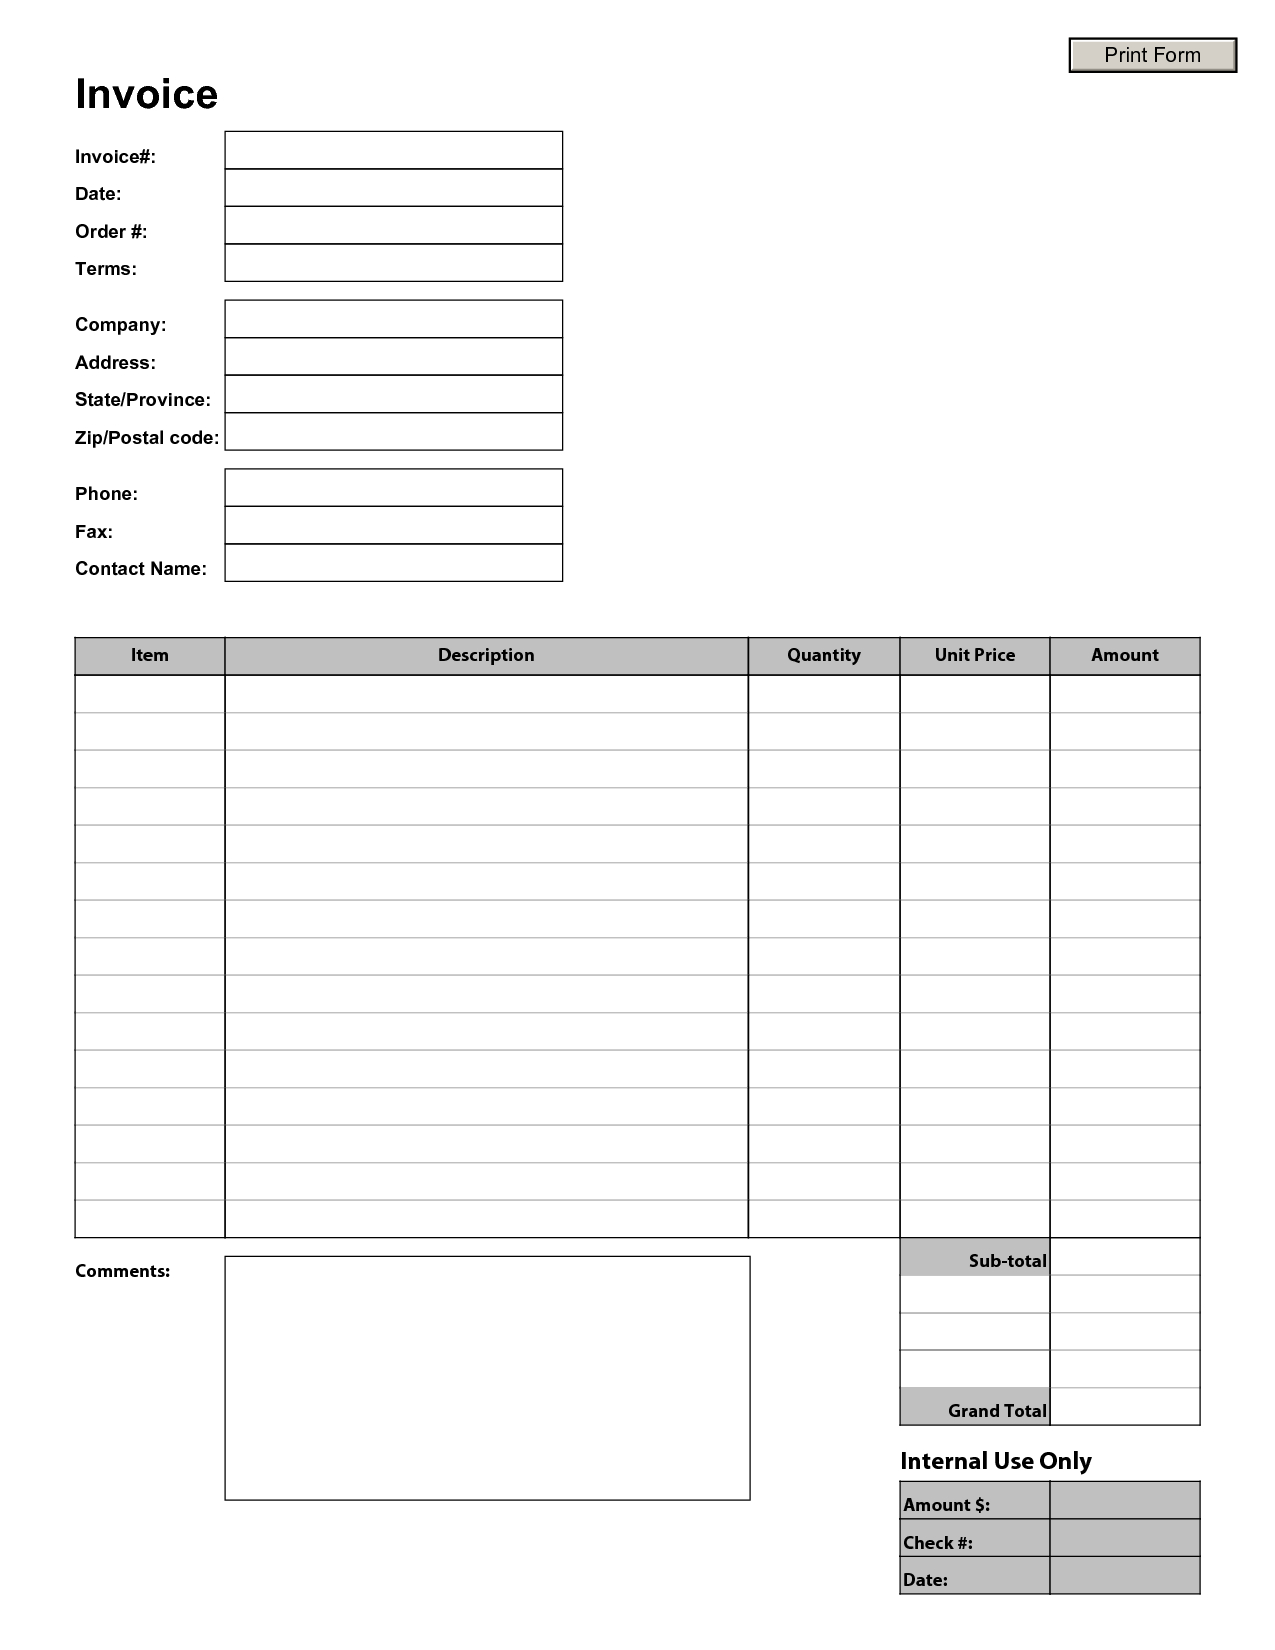 Blank Invoice Template | Blank Invoice | Arsenal | Printable Invoice - Free Printable Blank Invoice